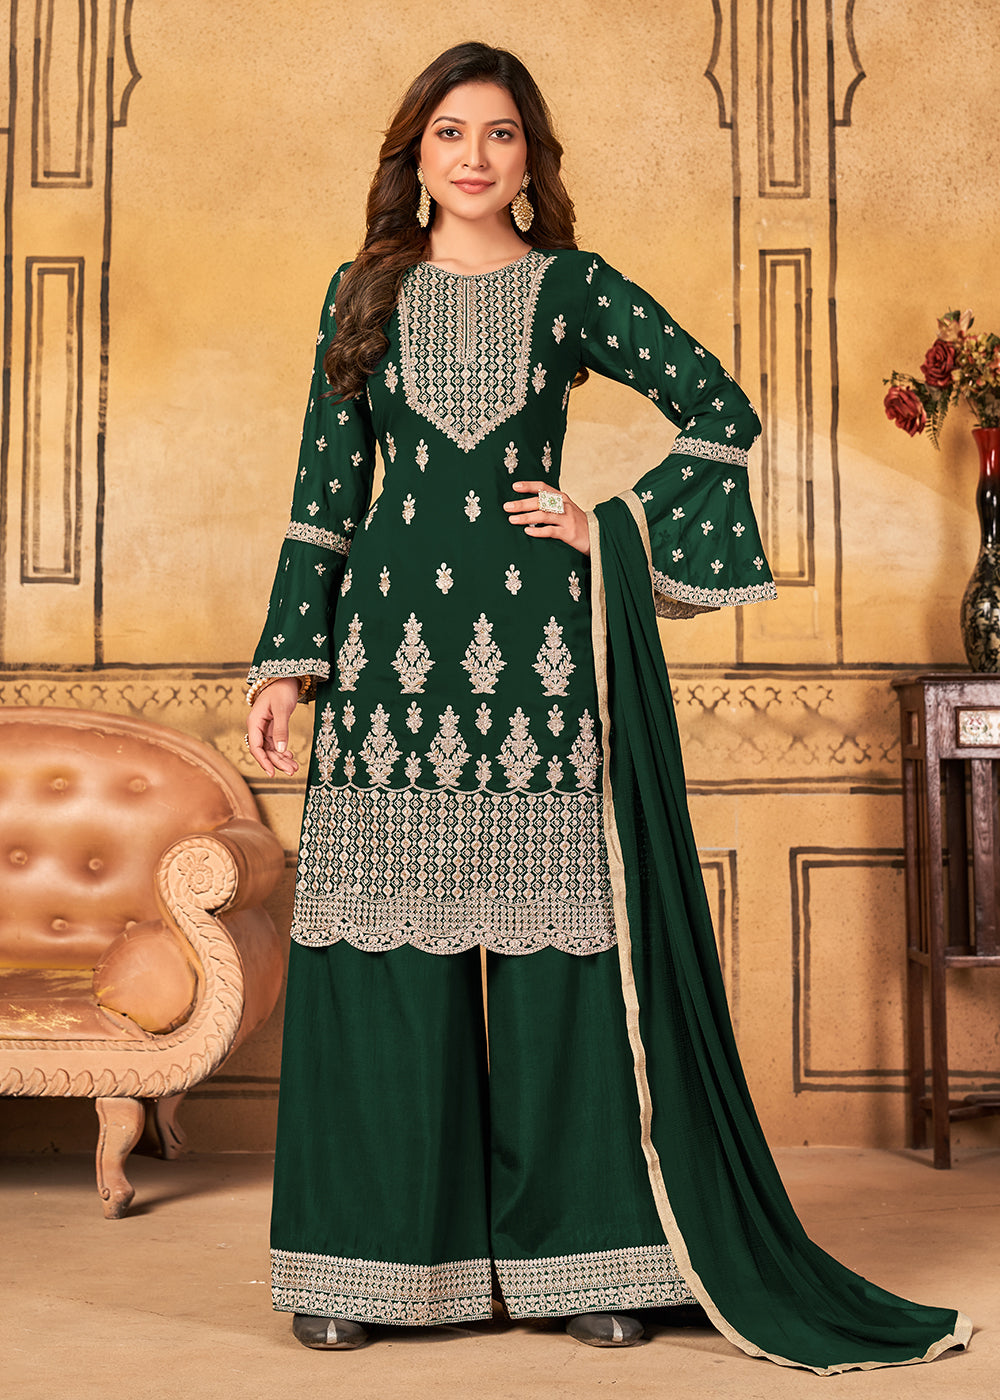 Buy Now Traditional Wedding Green Georgette Palazzo Salwar Kurta Online in USA, UK, Canada & Worldwide at Empress Clothing.